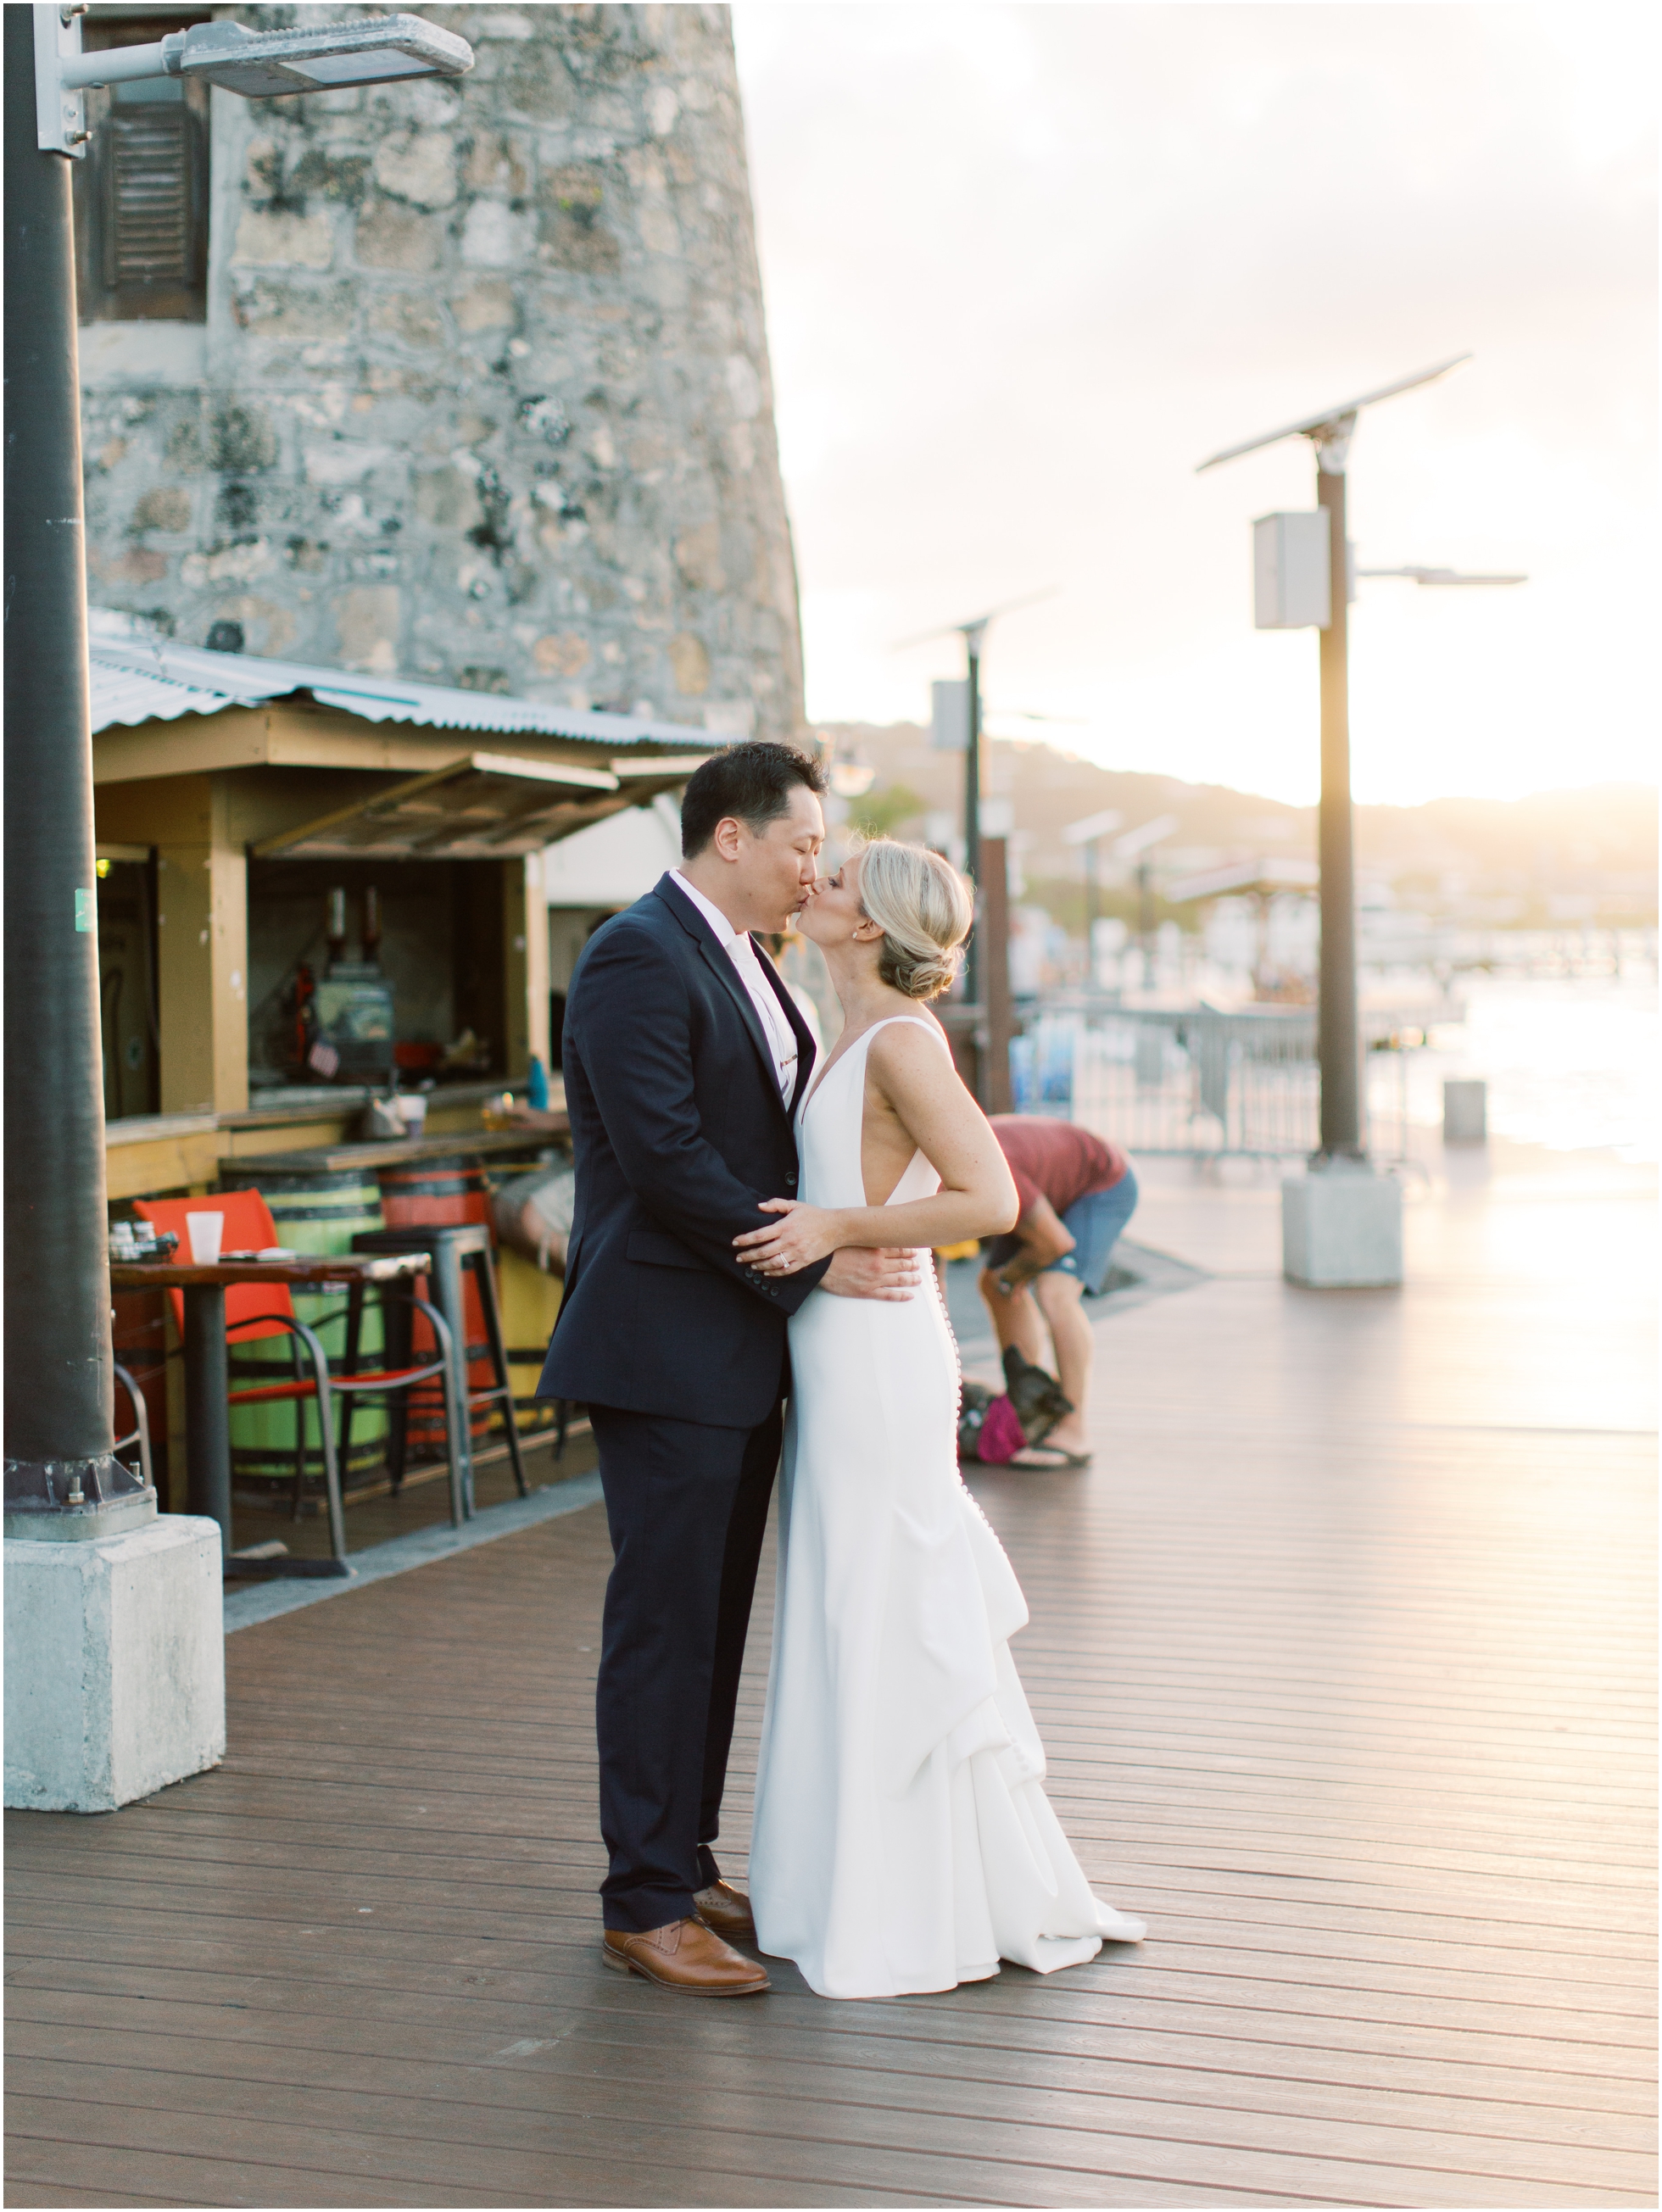 Island-Lover's Dream Wedding in the U.S. Virgin Islands